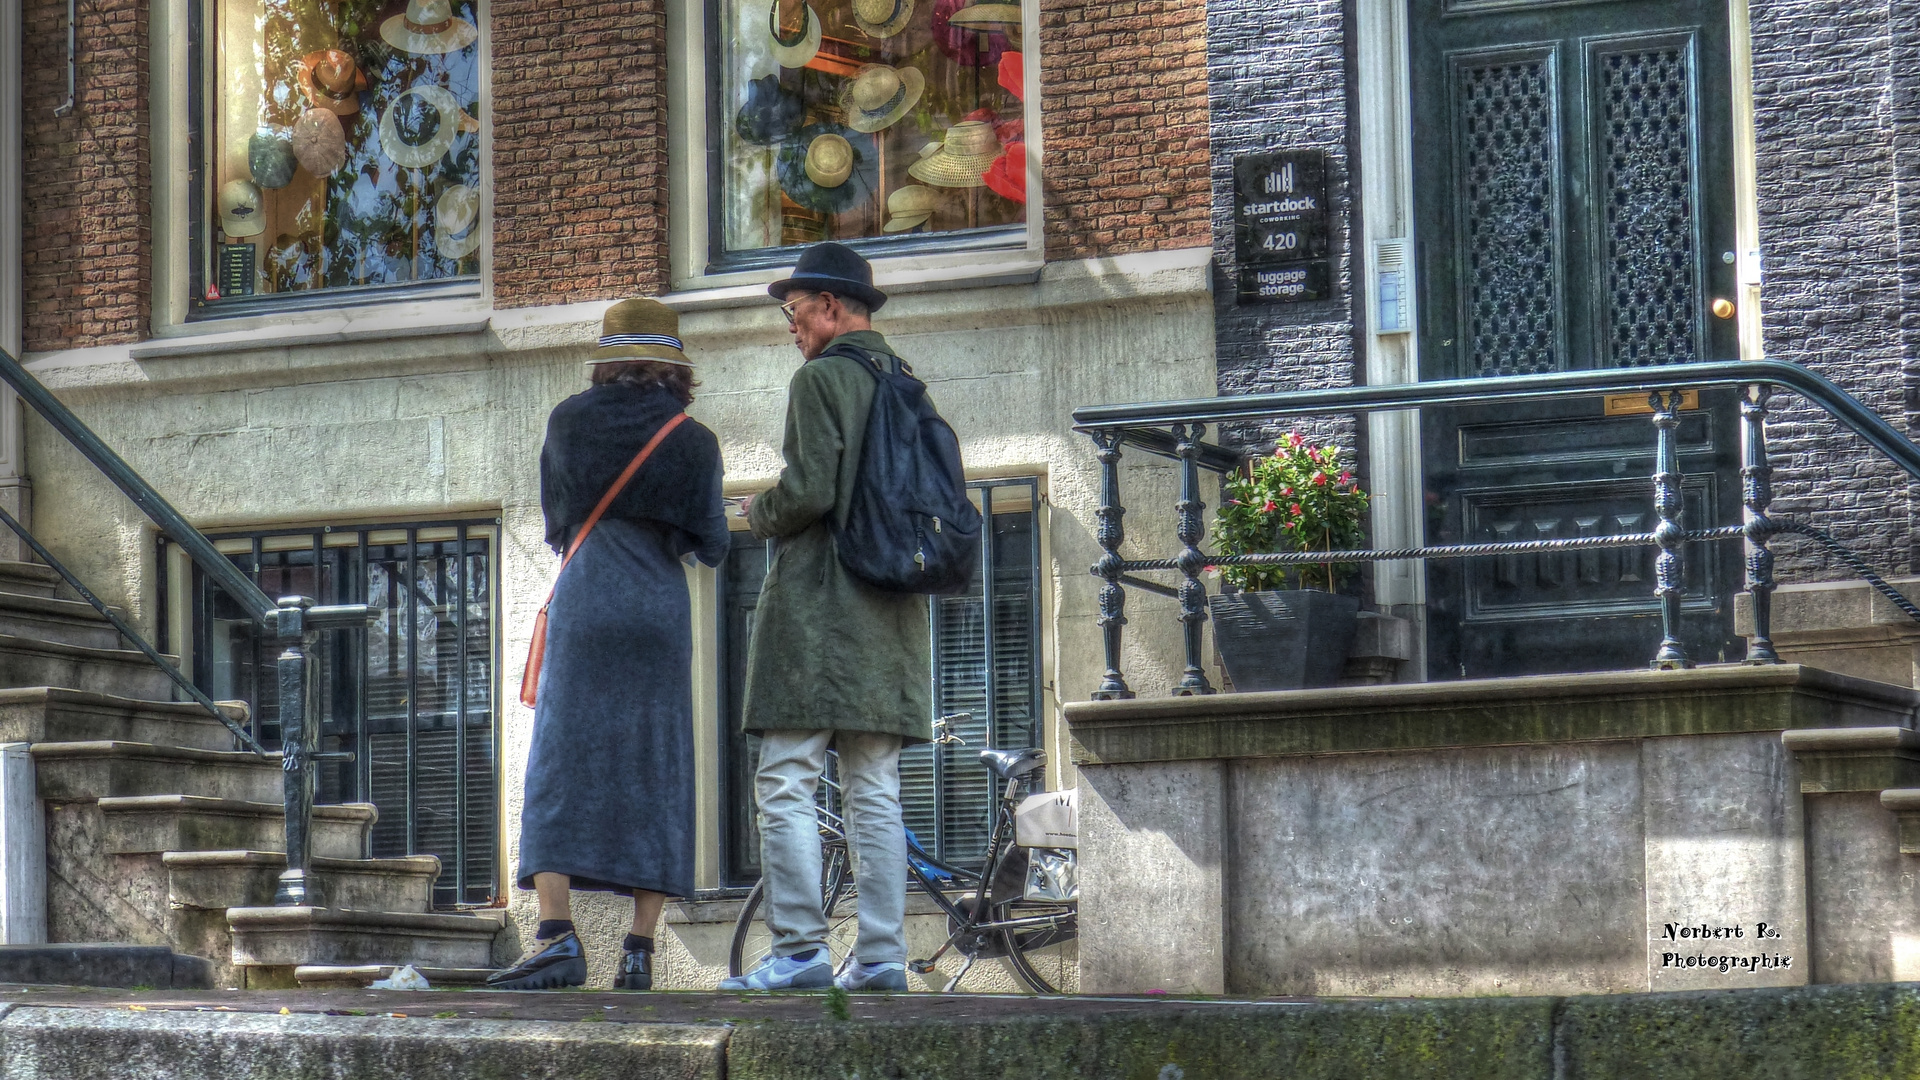 Streets of Amsterdam -